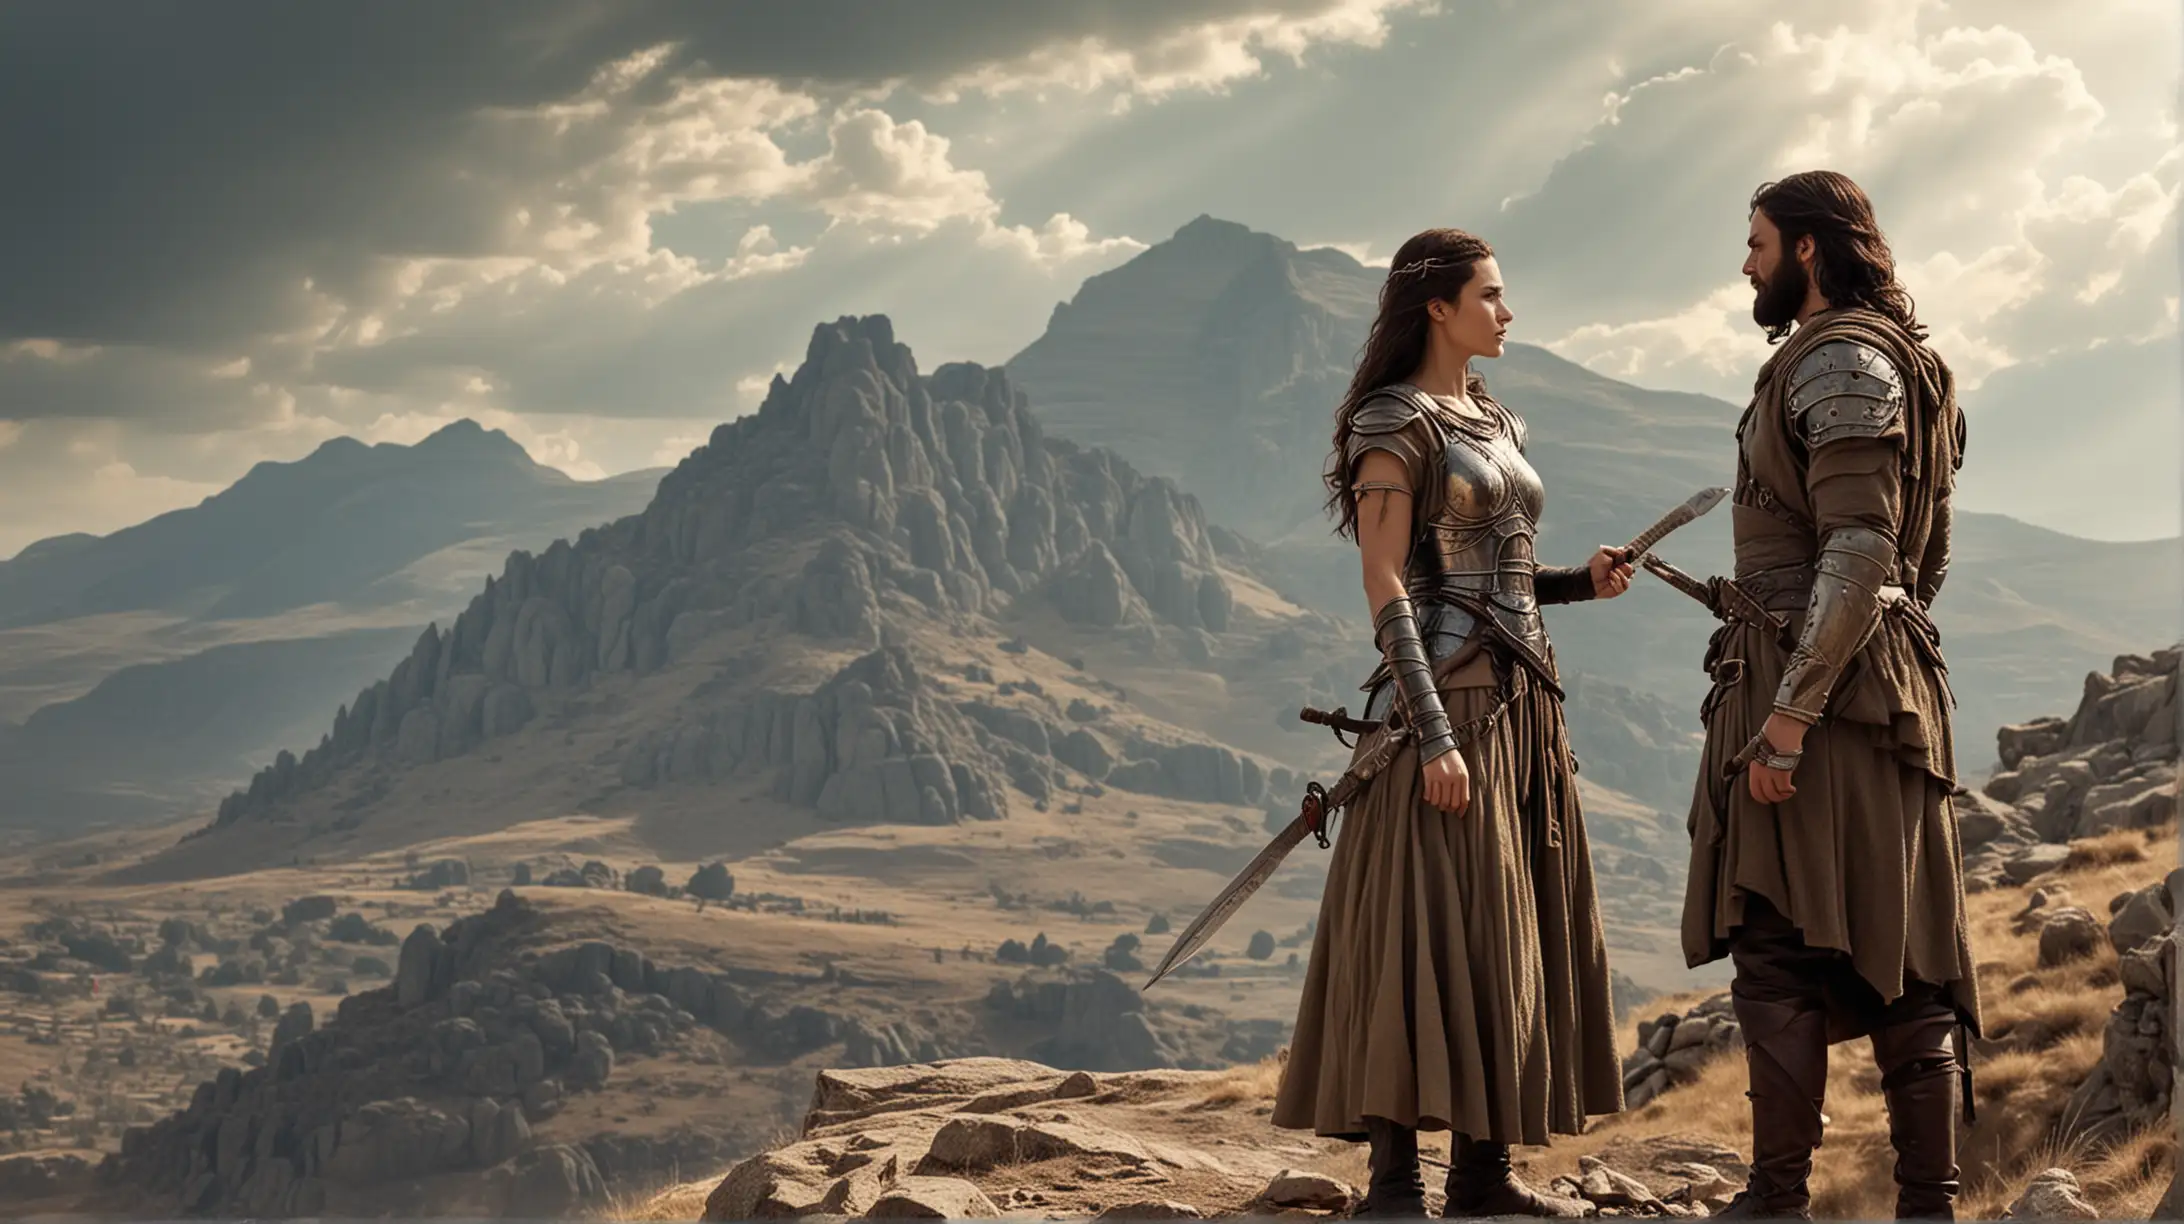 Armored Woman with Sword on Mountain Speaking to Messenger Biblical Era Elijah Scene